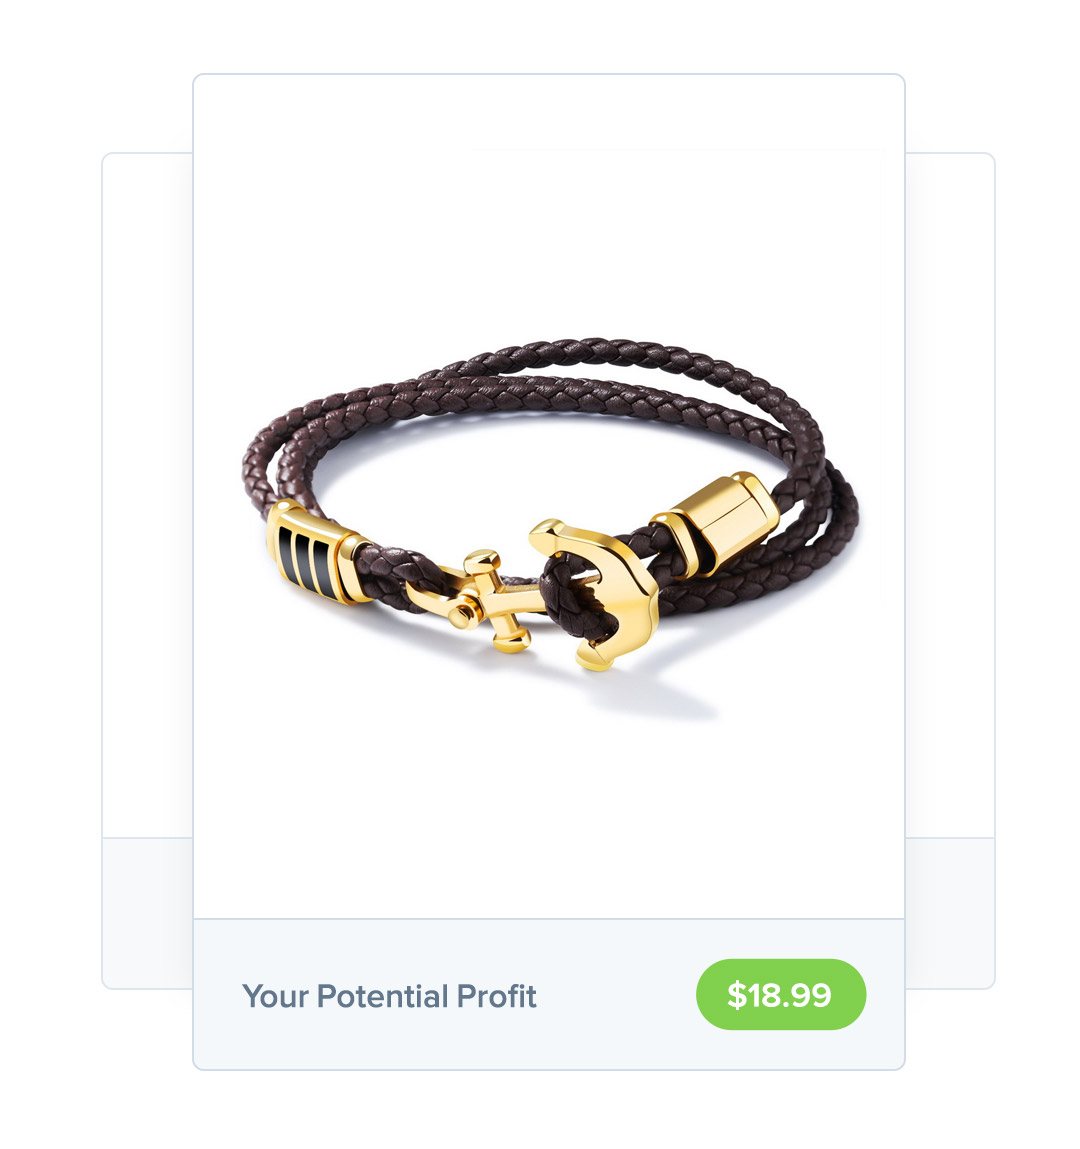 sell bracelets online